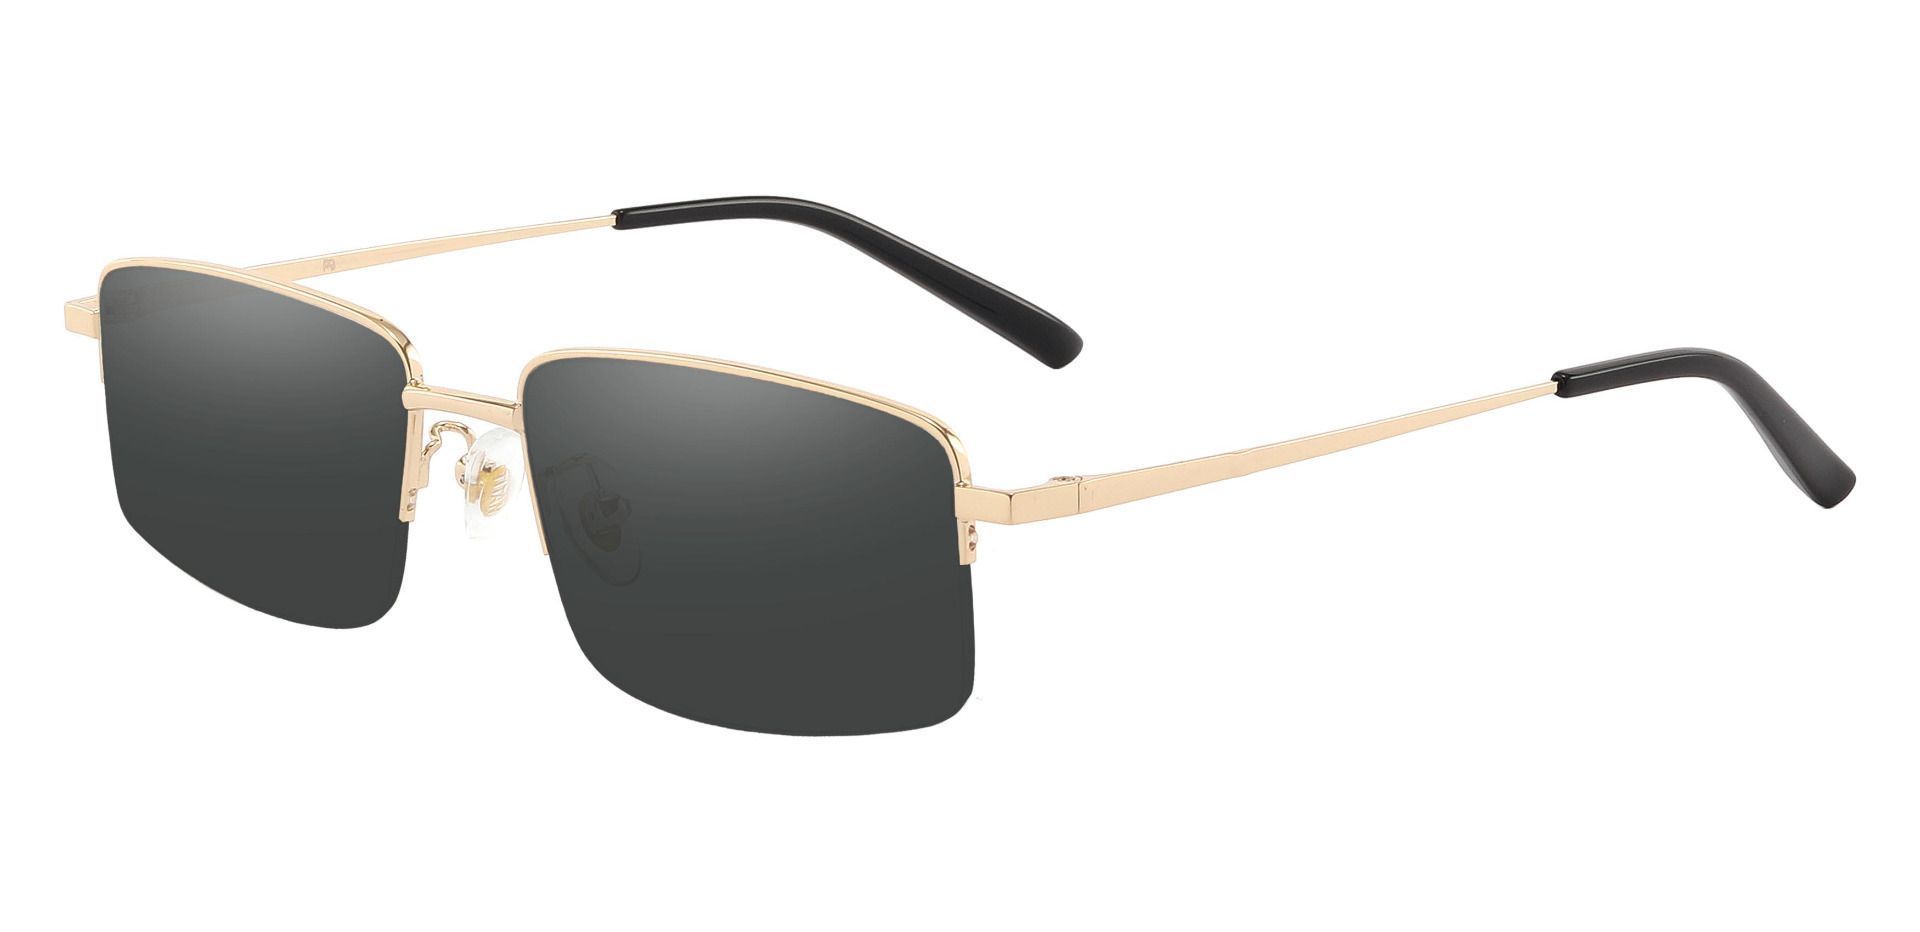 Wayne Rectangle Prescription Sunglasses - Gold Frame With Gray Lenses